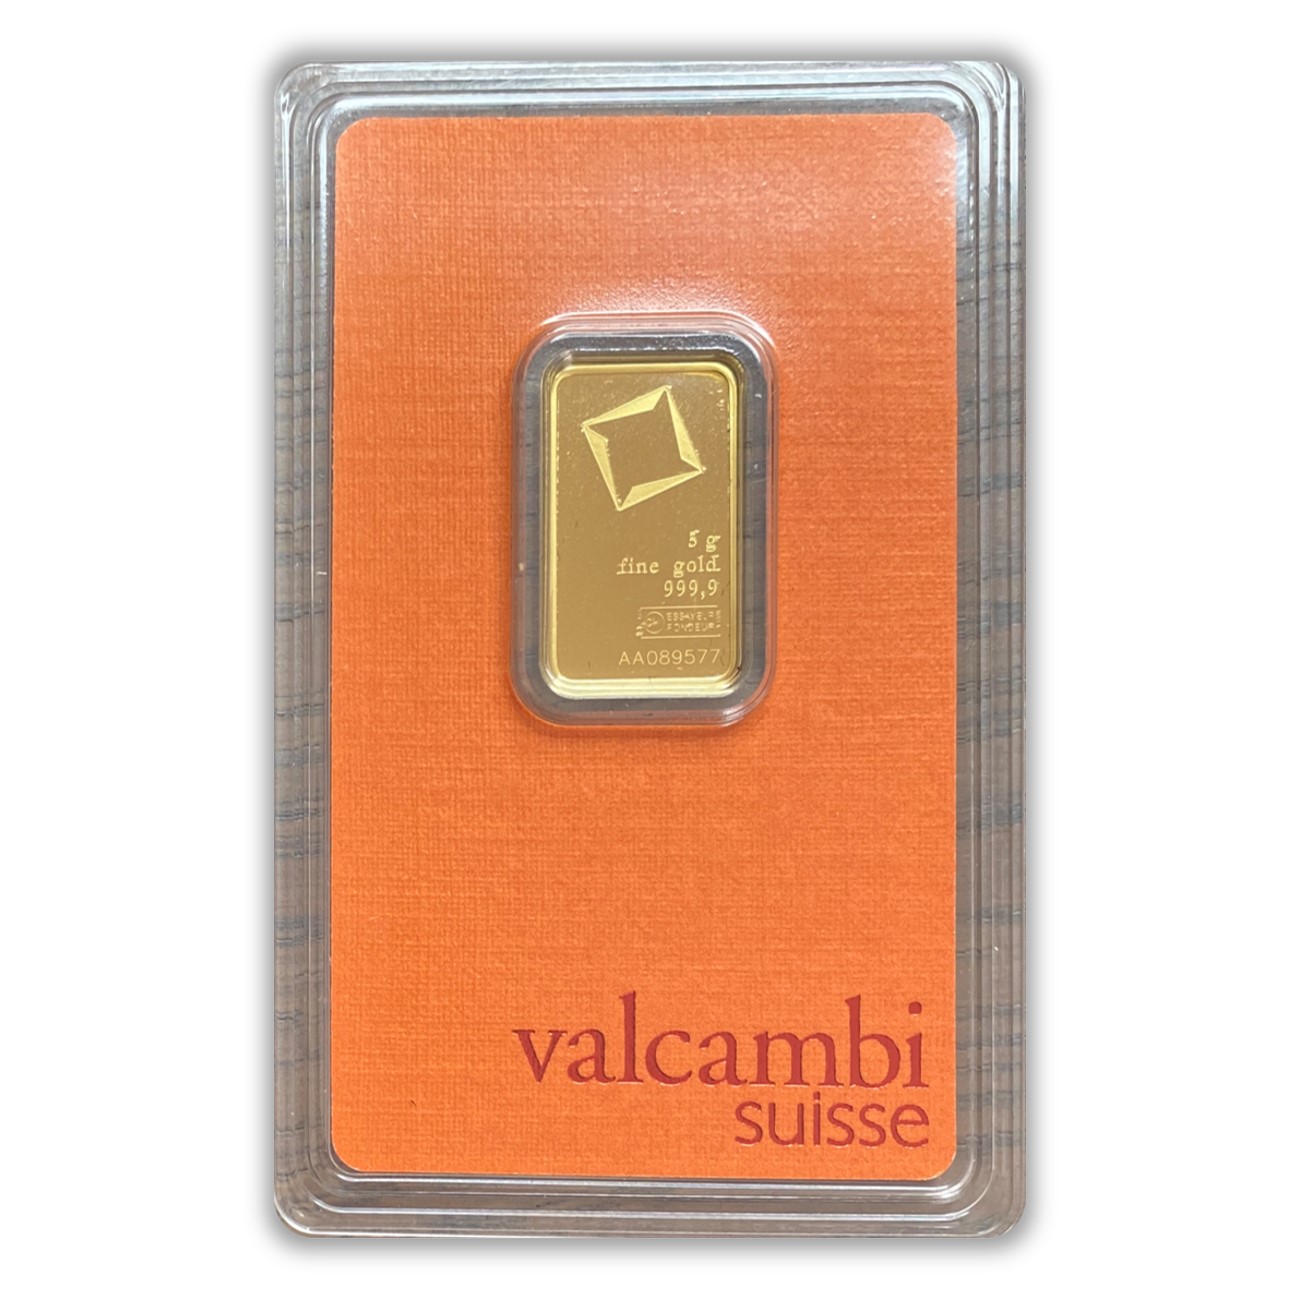 Valcambi 5 gram Gold Bar